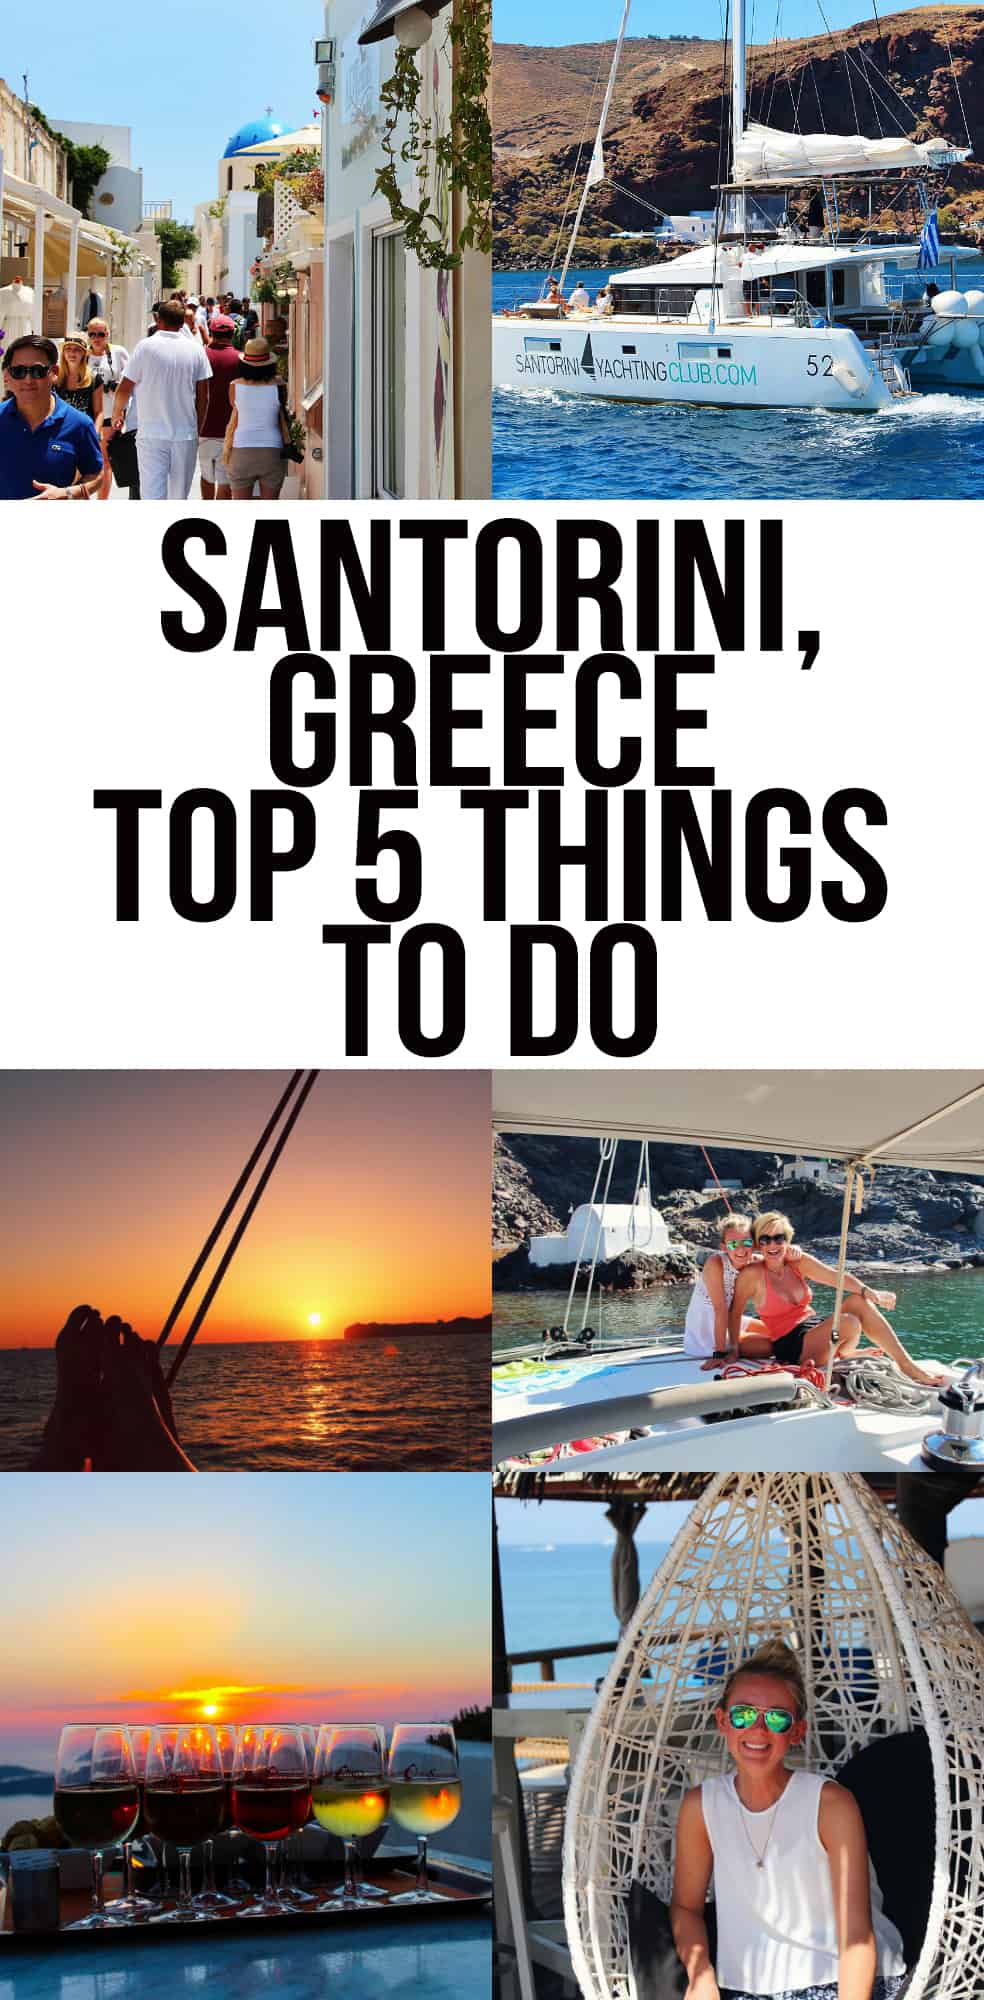 things-to-do-santorini-greece copy